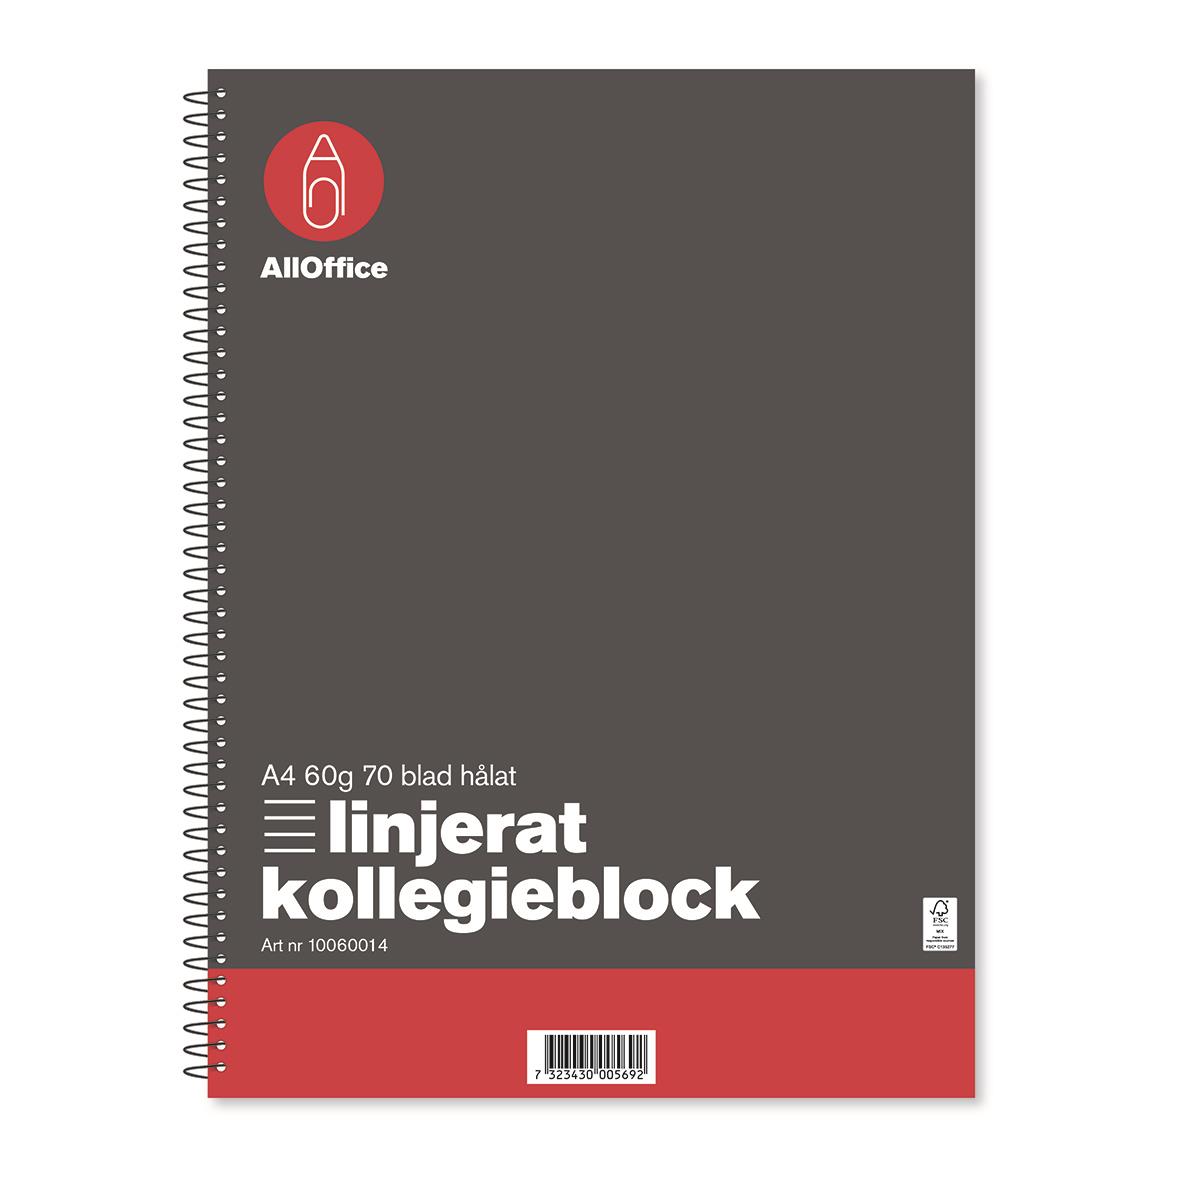 Kollegieblock AllOffice linjerat A4 60g 10060014